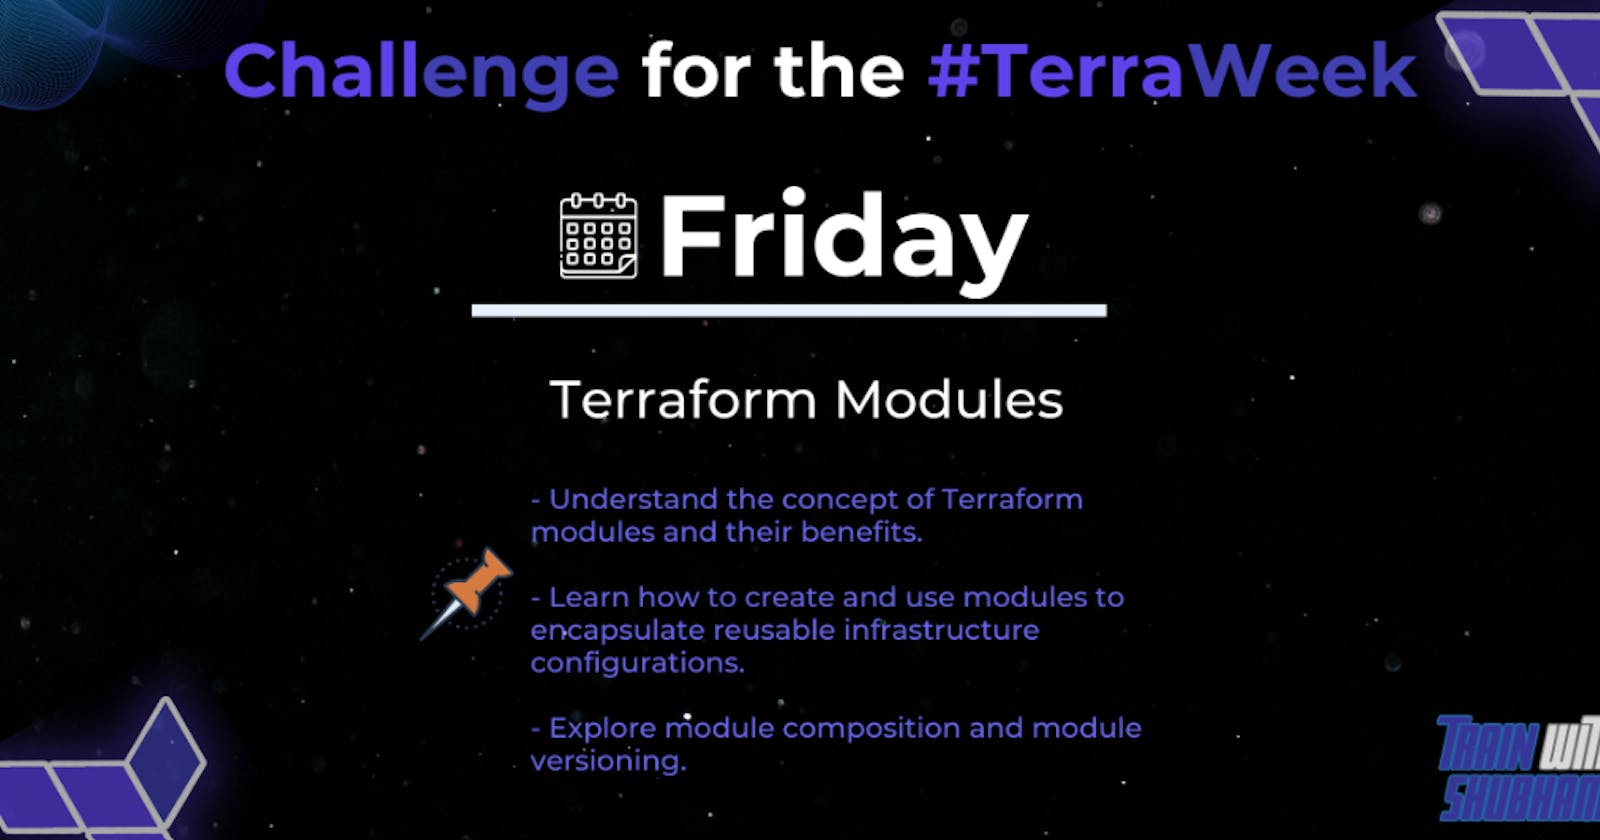 Day 5 : TWS Terra Week Challenge